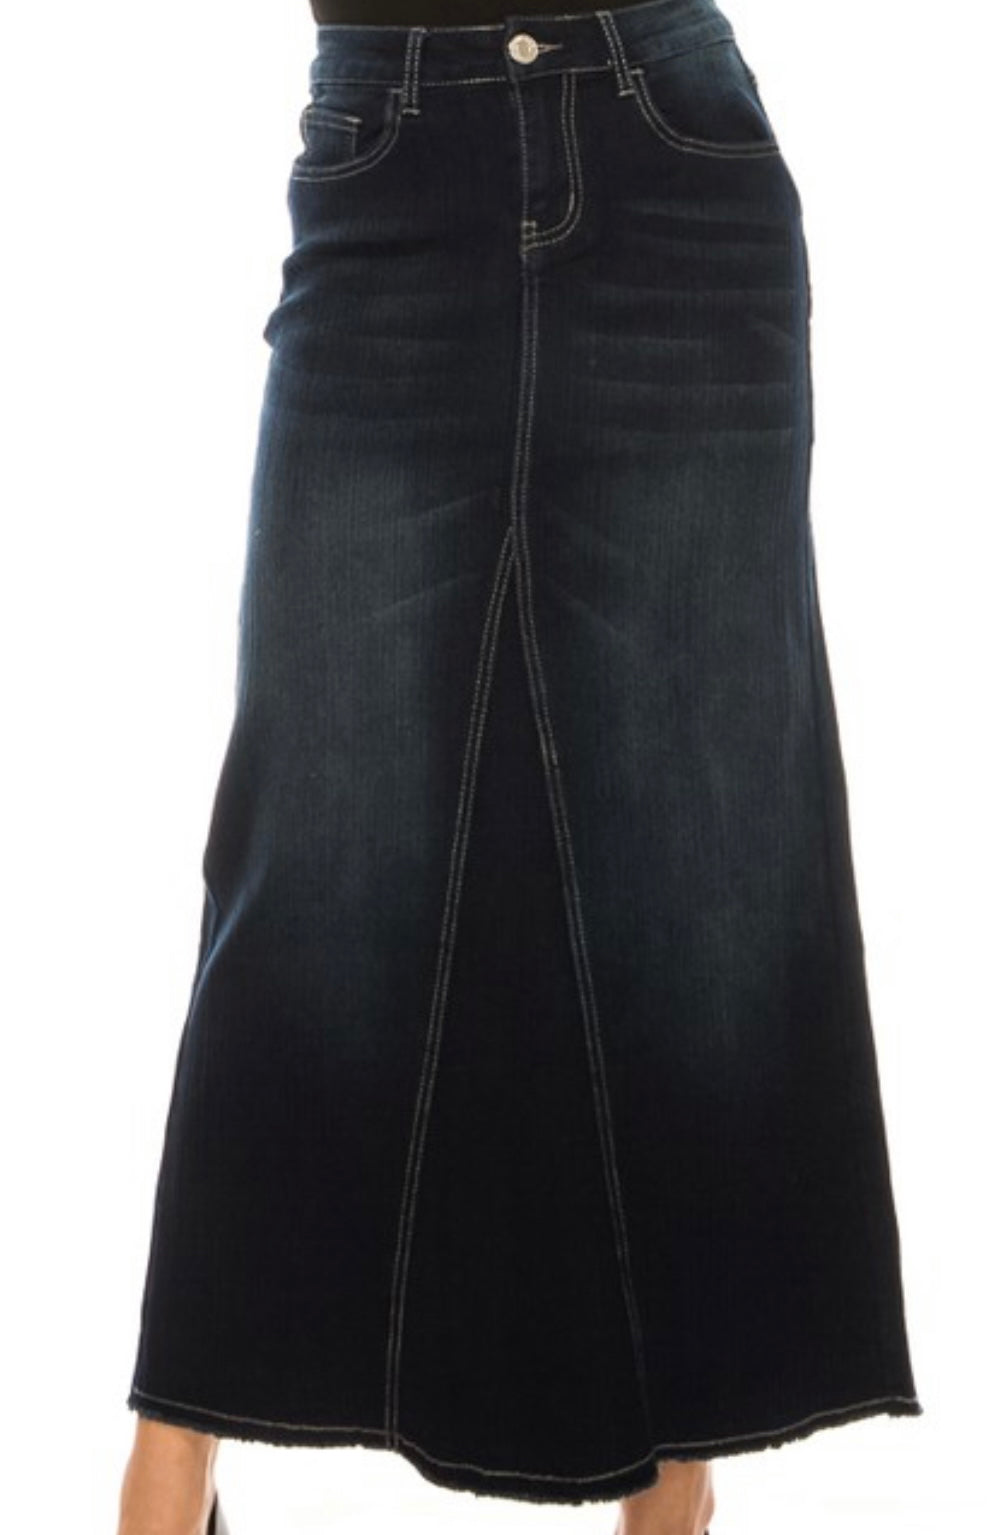 “Emery Claire” Long Dark Denim Skirt